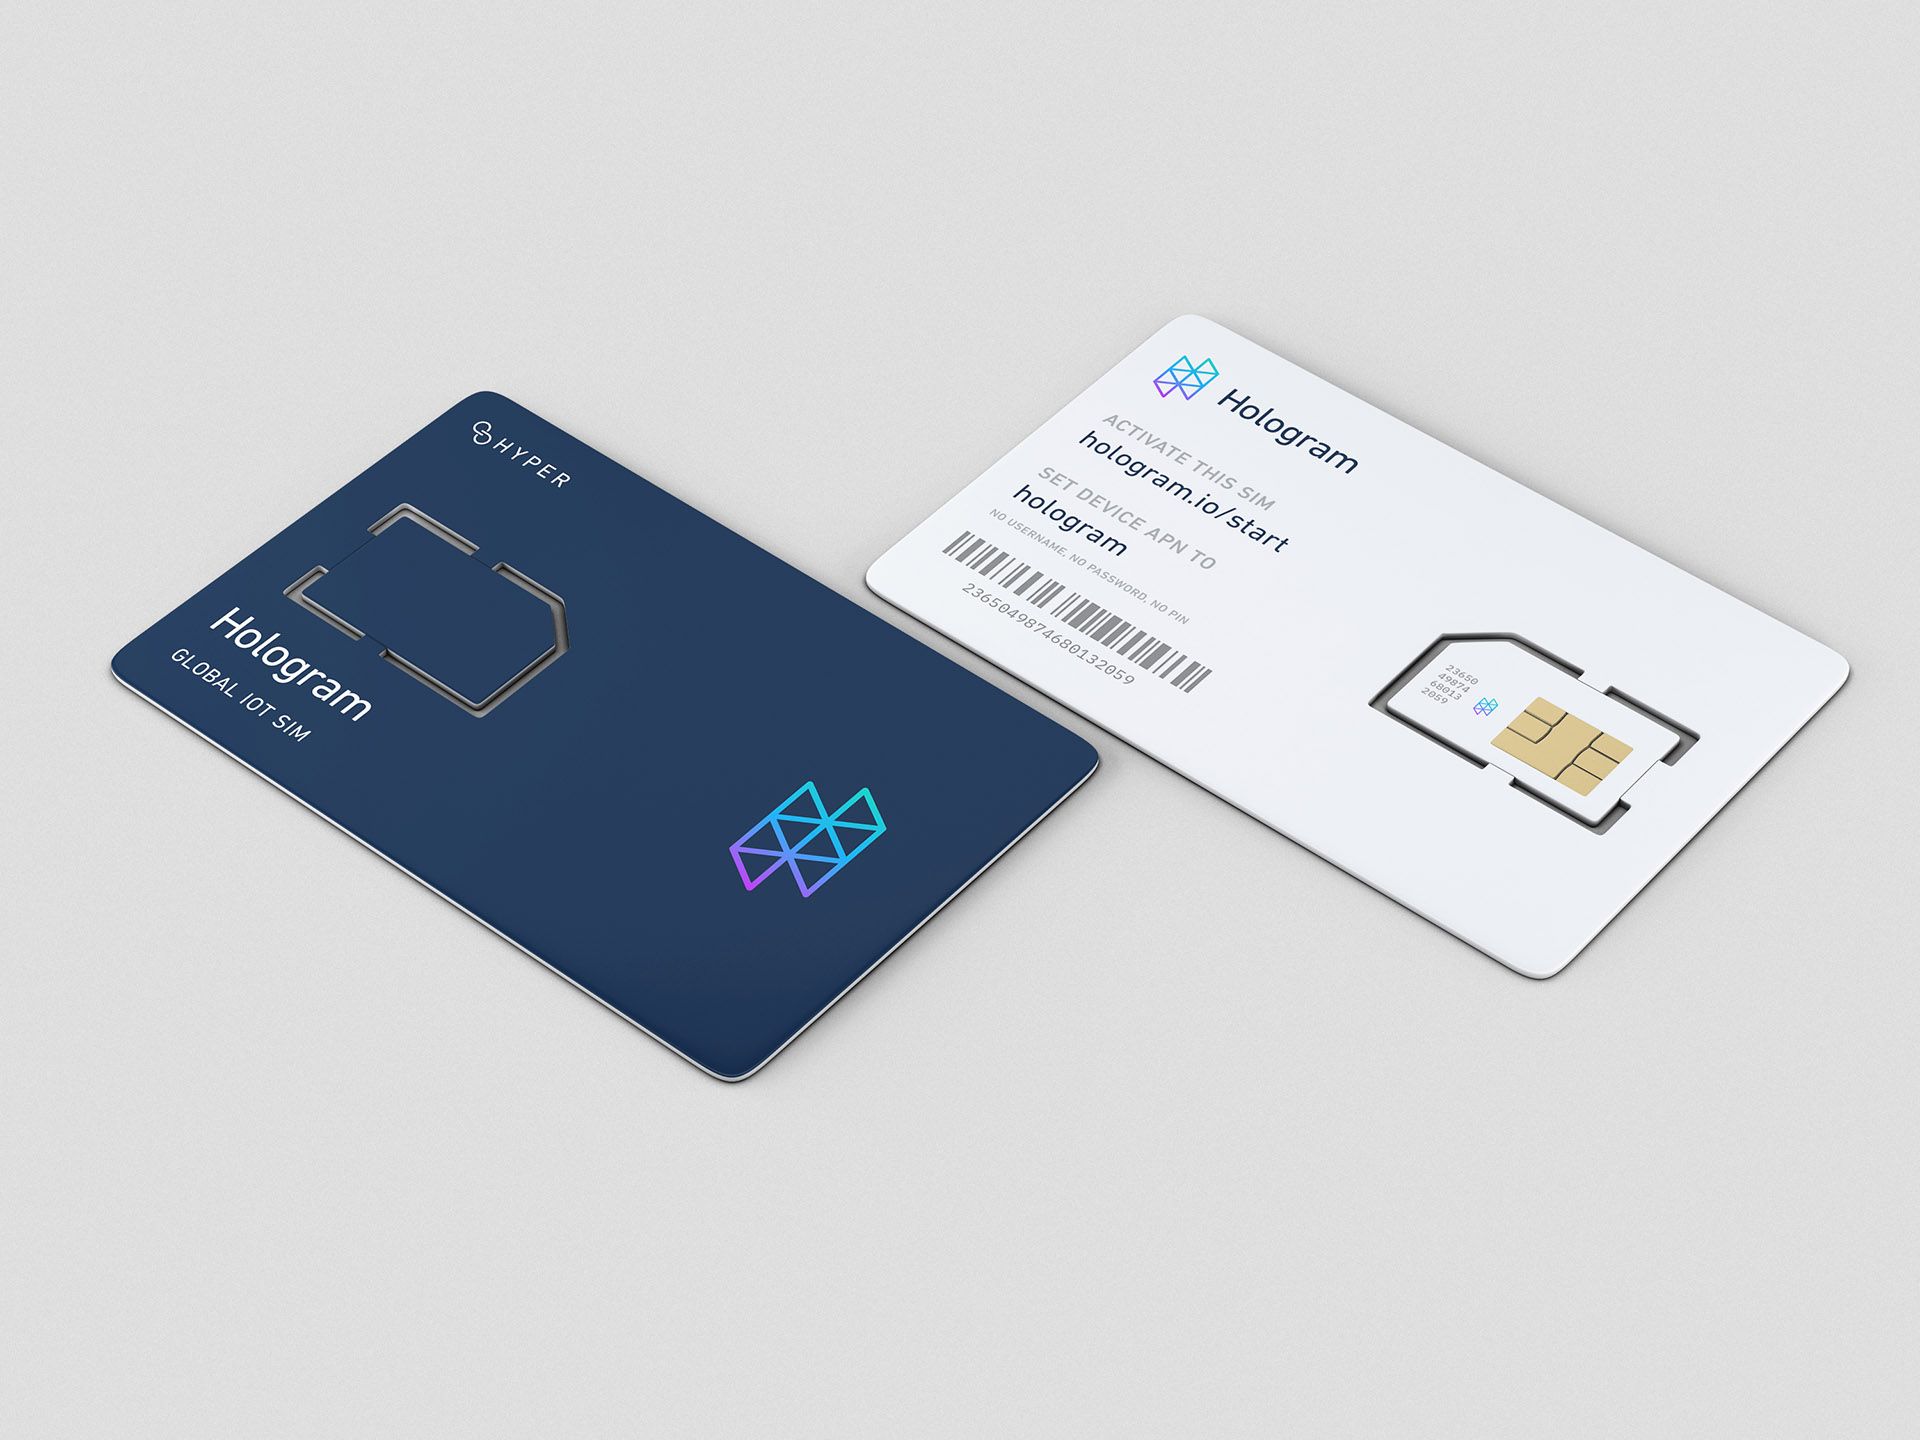 Global Hyper eUICC IoT SIM Card